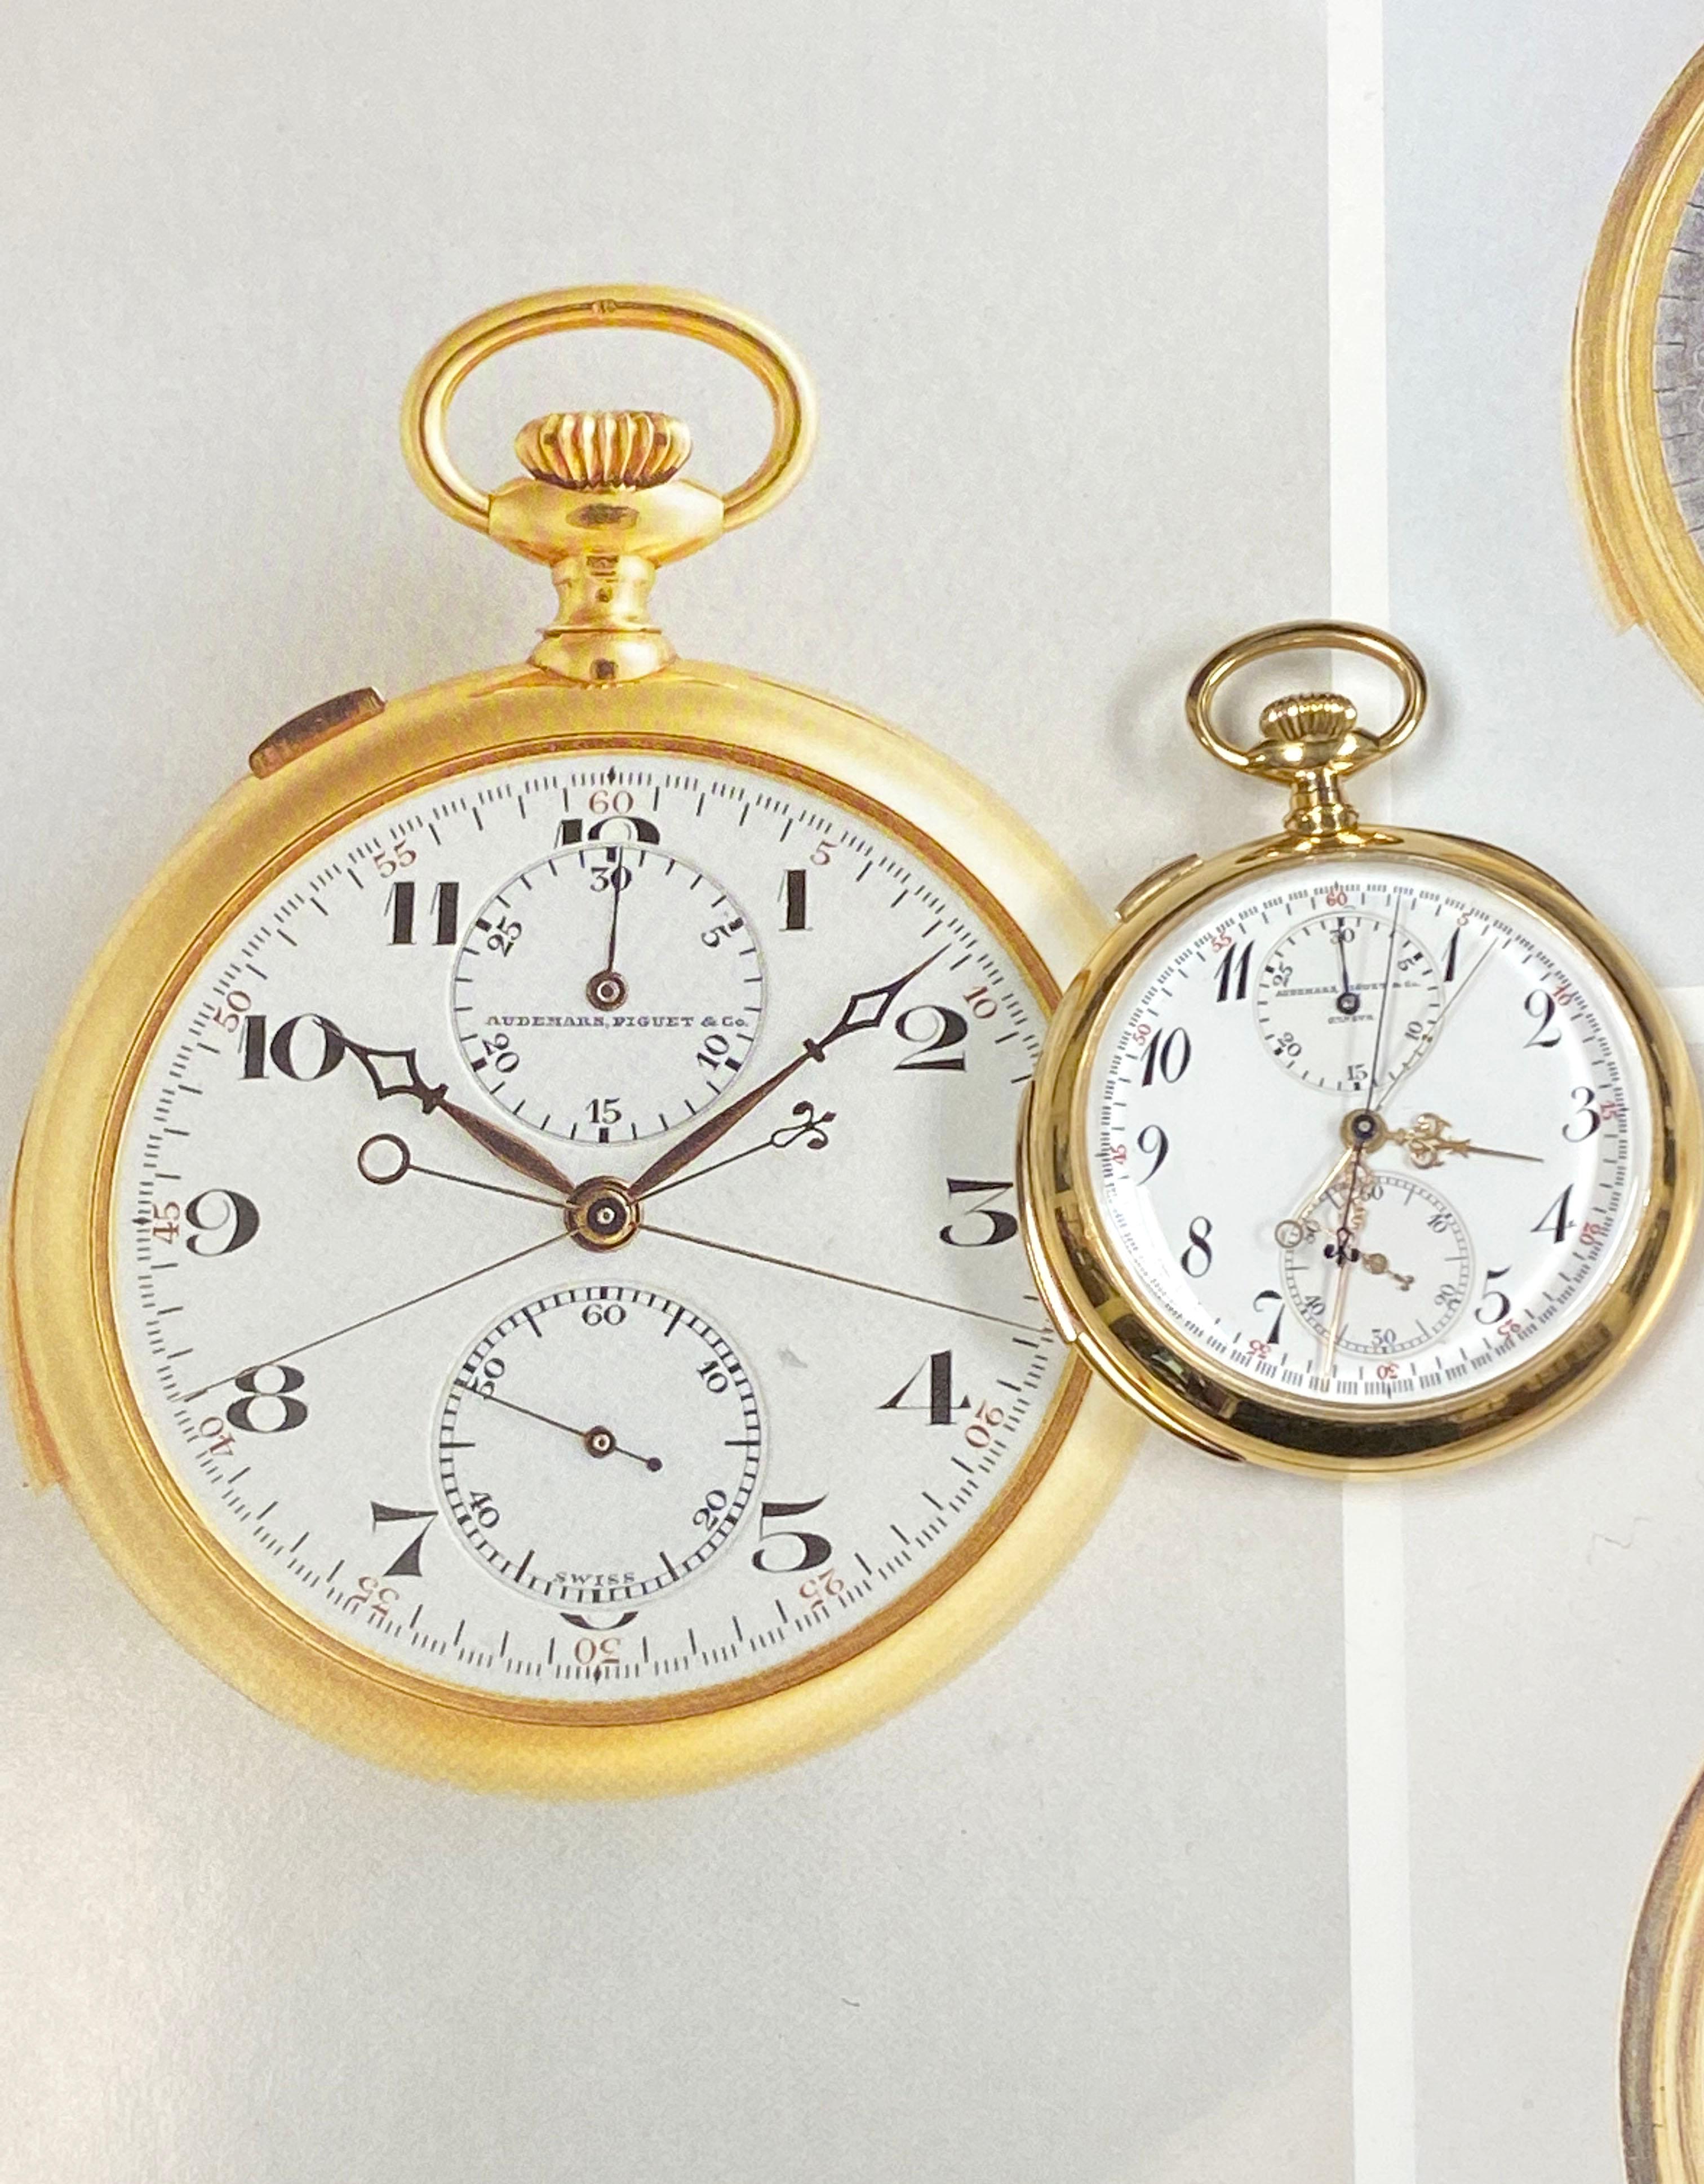 Audemars Piguet Minute Repeater Chronograph Pocket Watch Historic Presentation 3